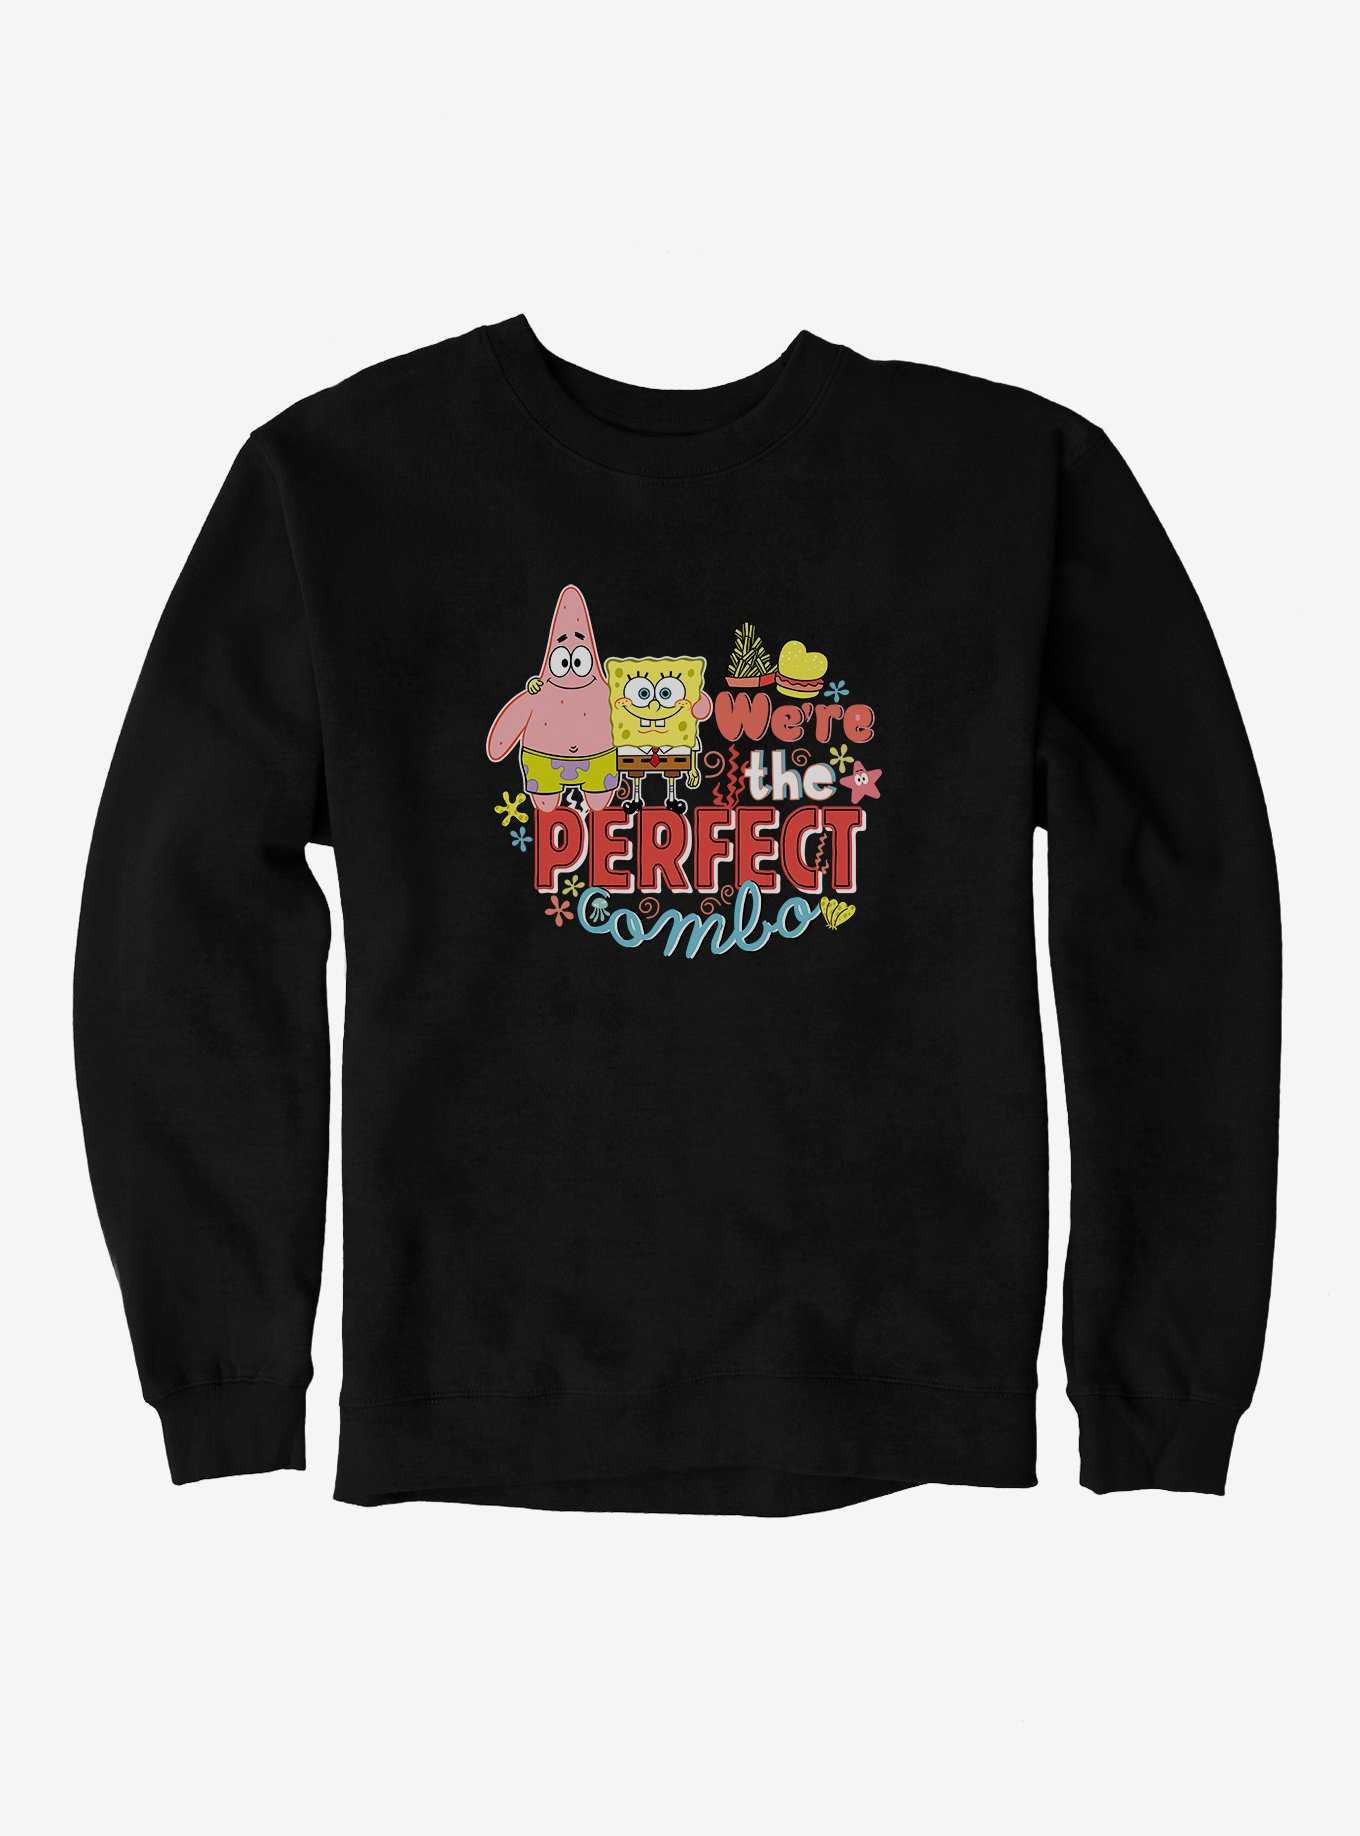 Nickelodeon SpongeBob SquarePants Boy's SUP! Jellyfish Youth T-Shirt (XL)